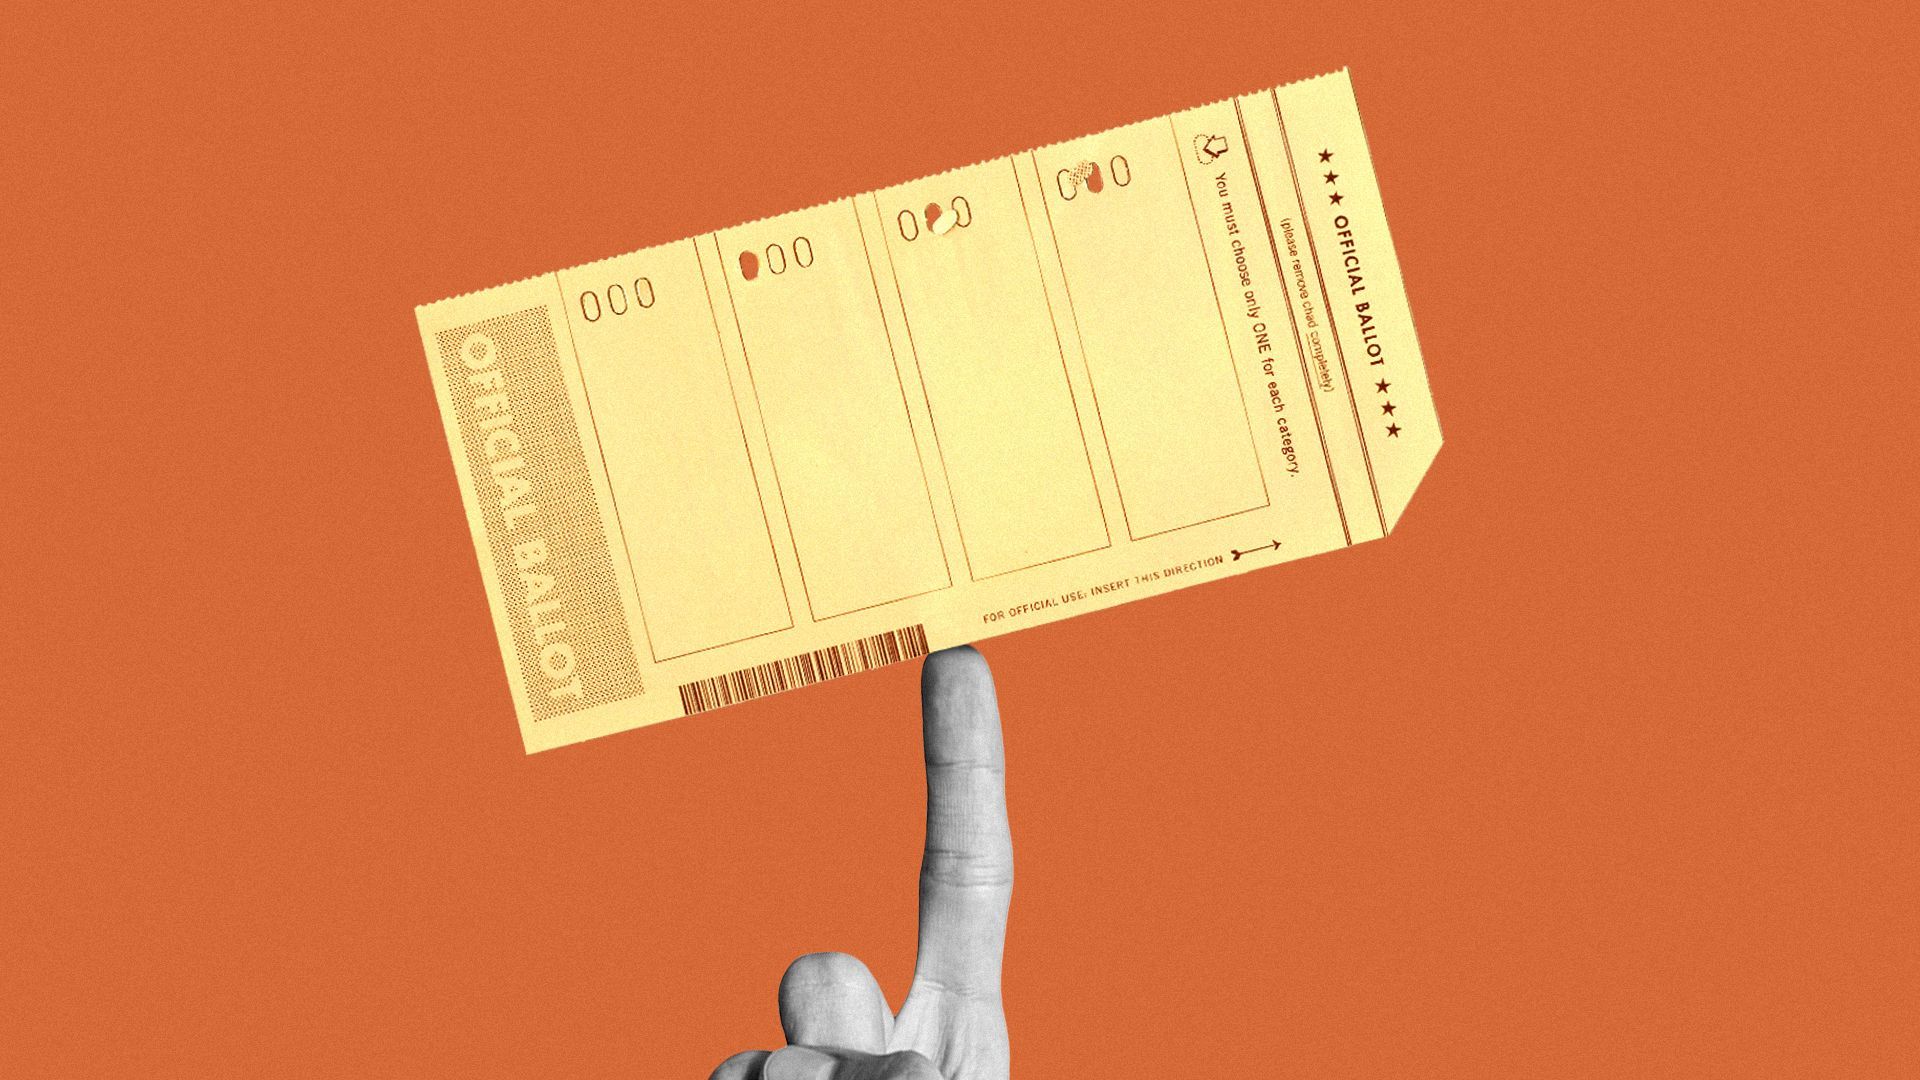 Illustration of a ballot balancing on a finger.